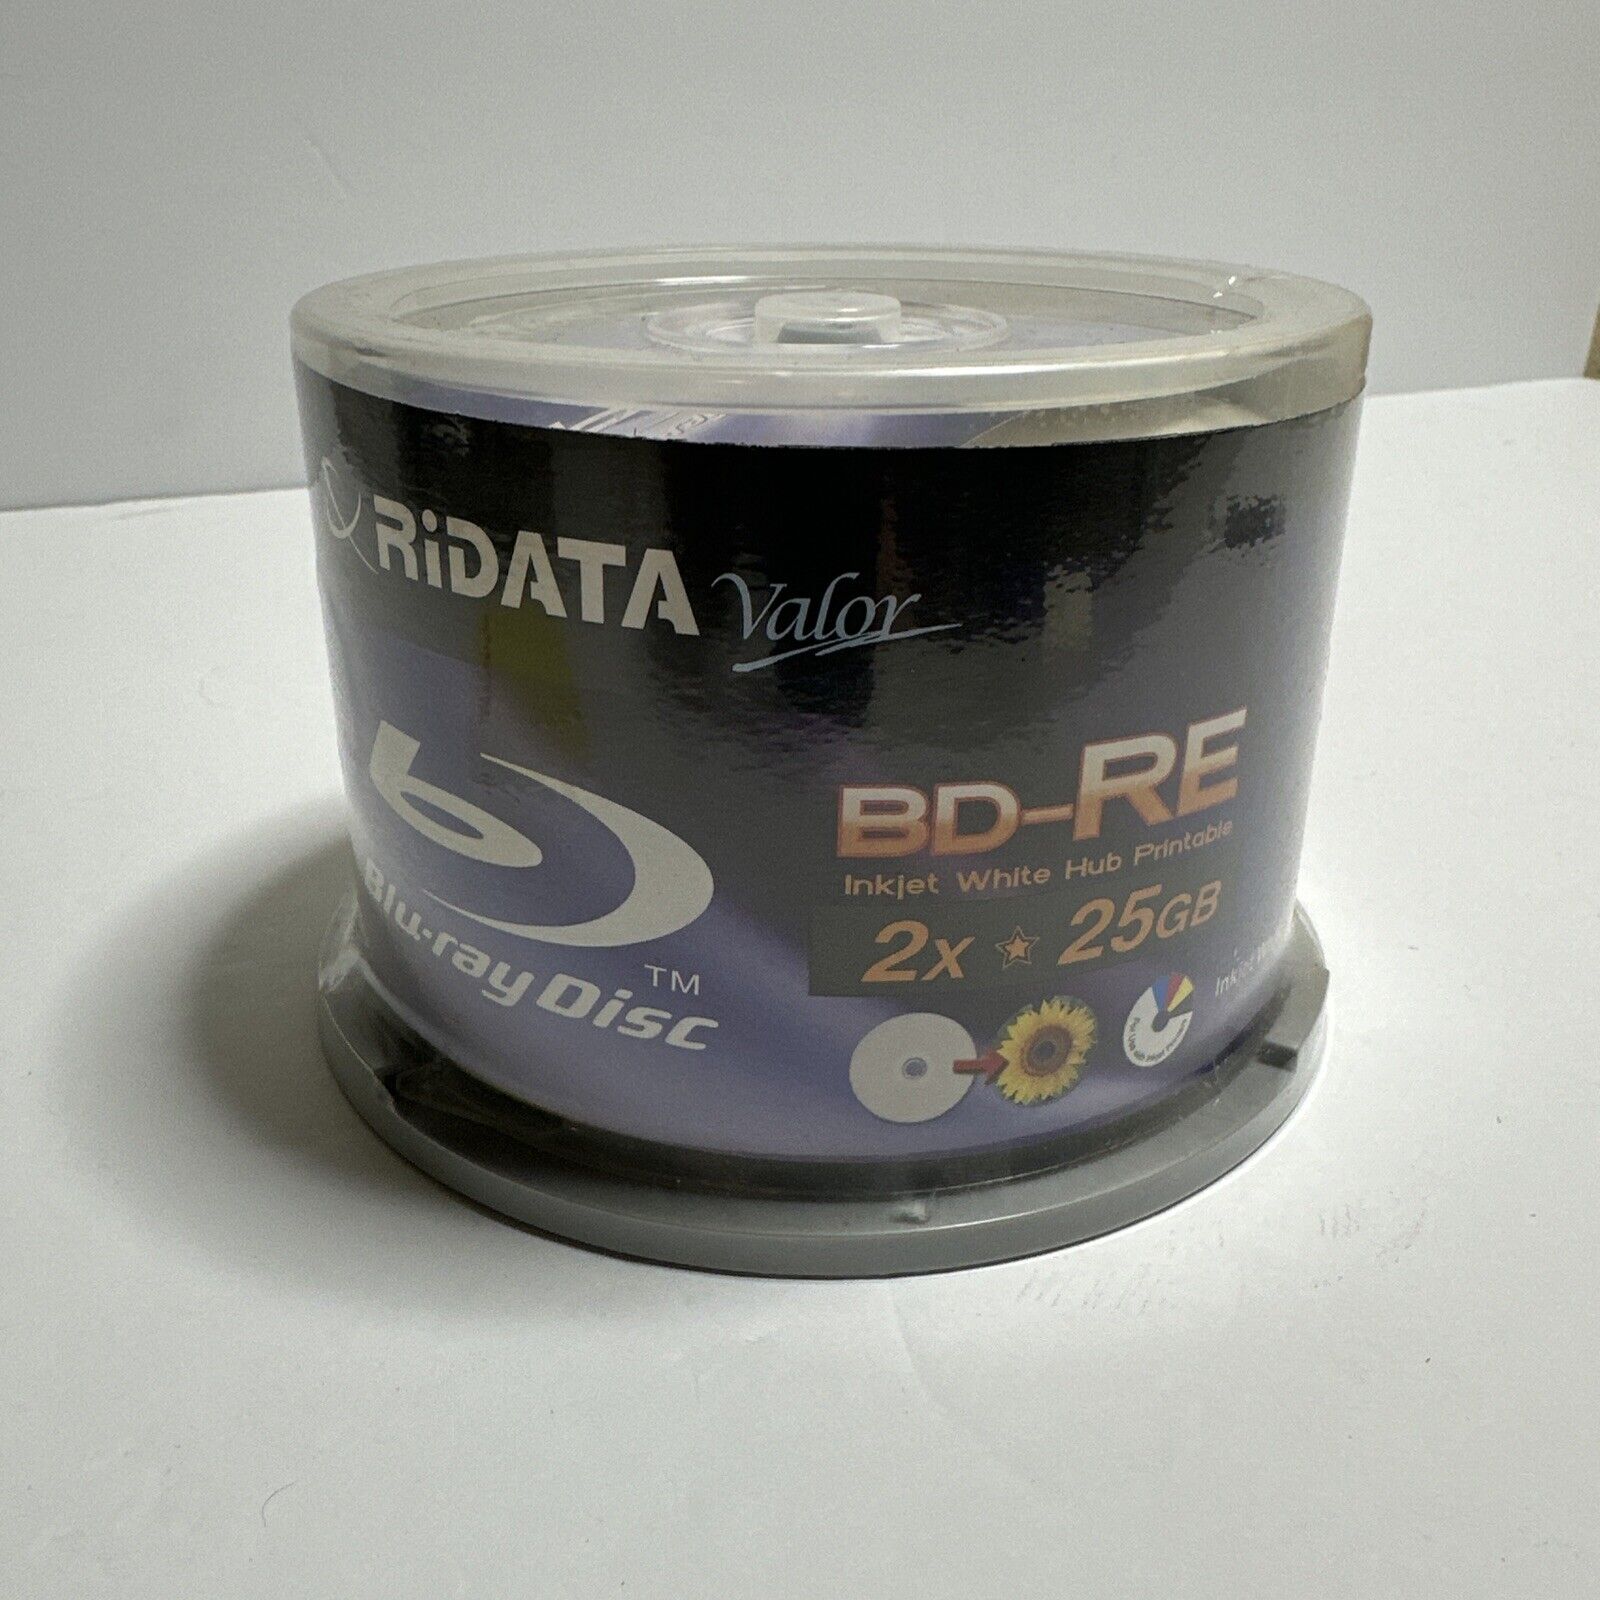 50 RIDATA Valor BluRay 2X Blank BD-RE 25GB White Inkjet Hub Printable Disc